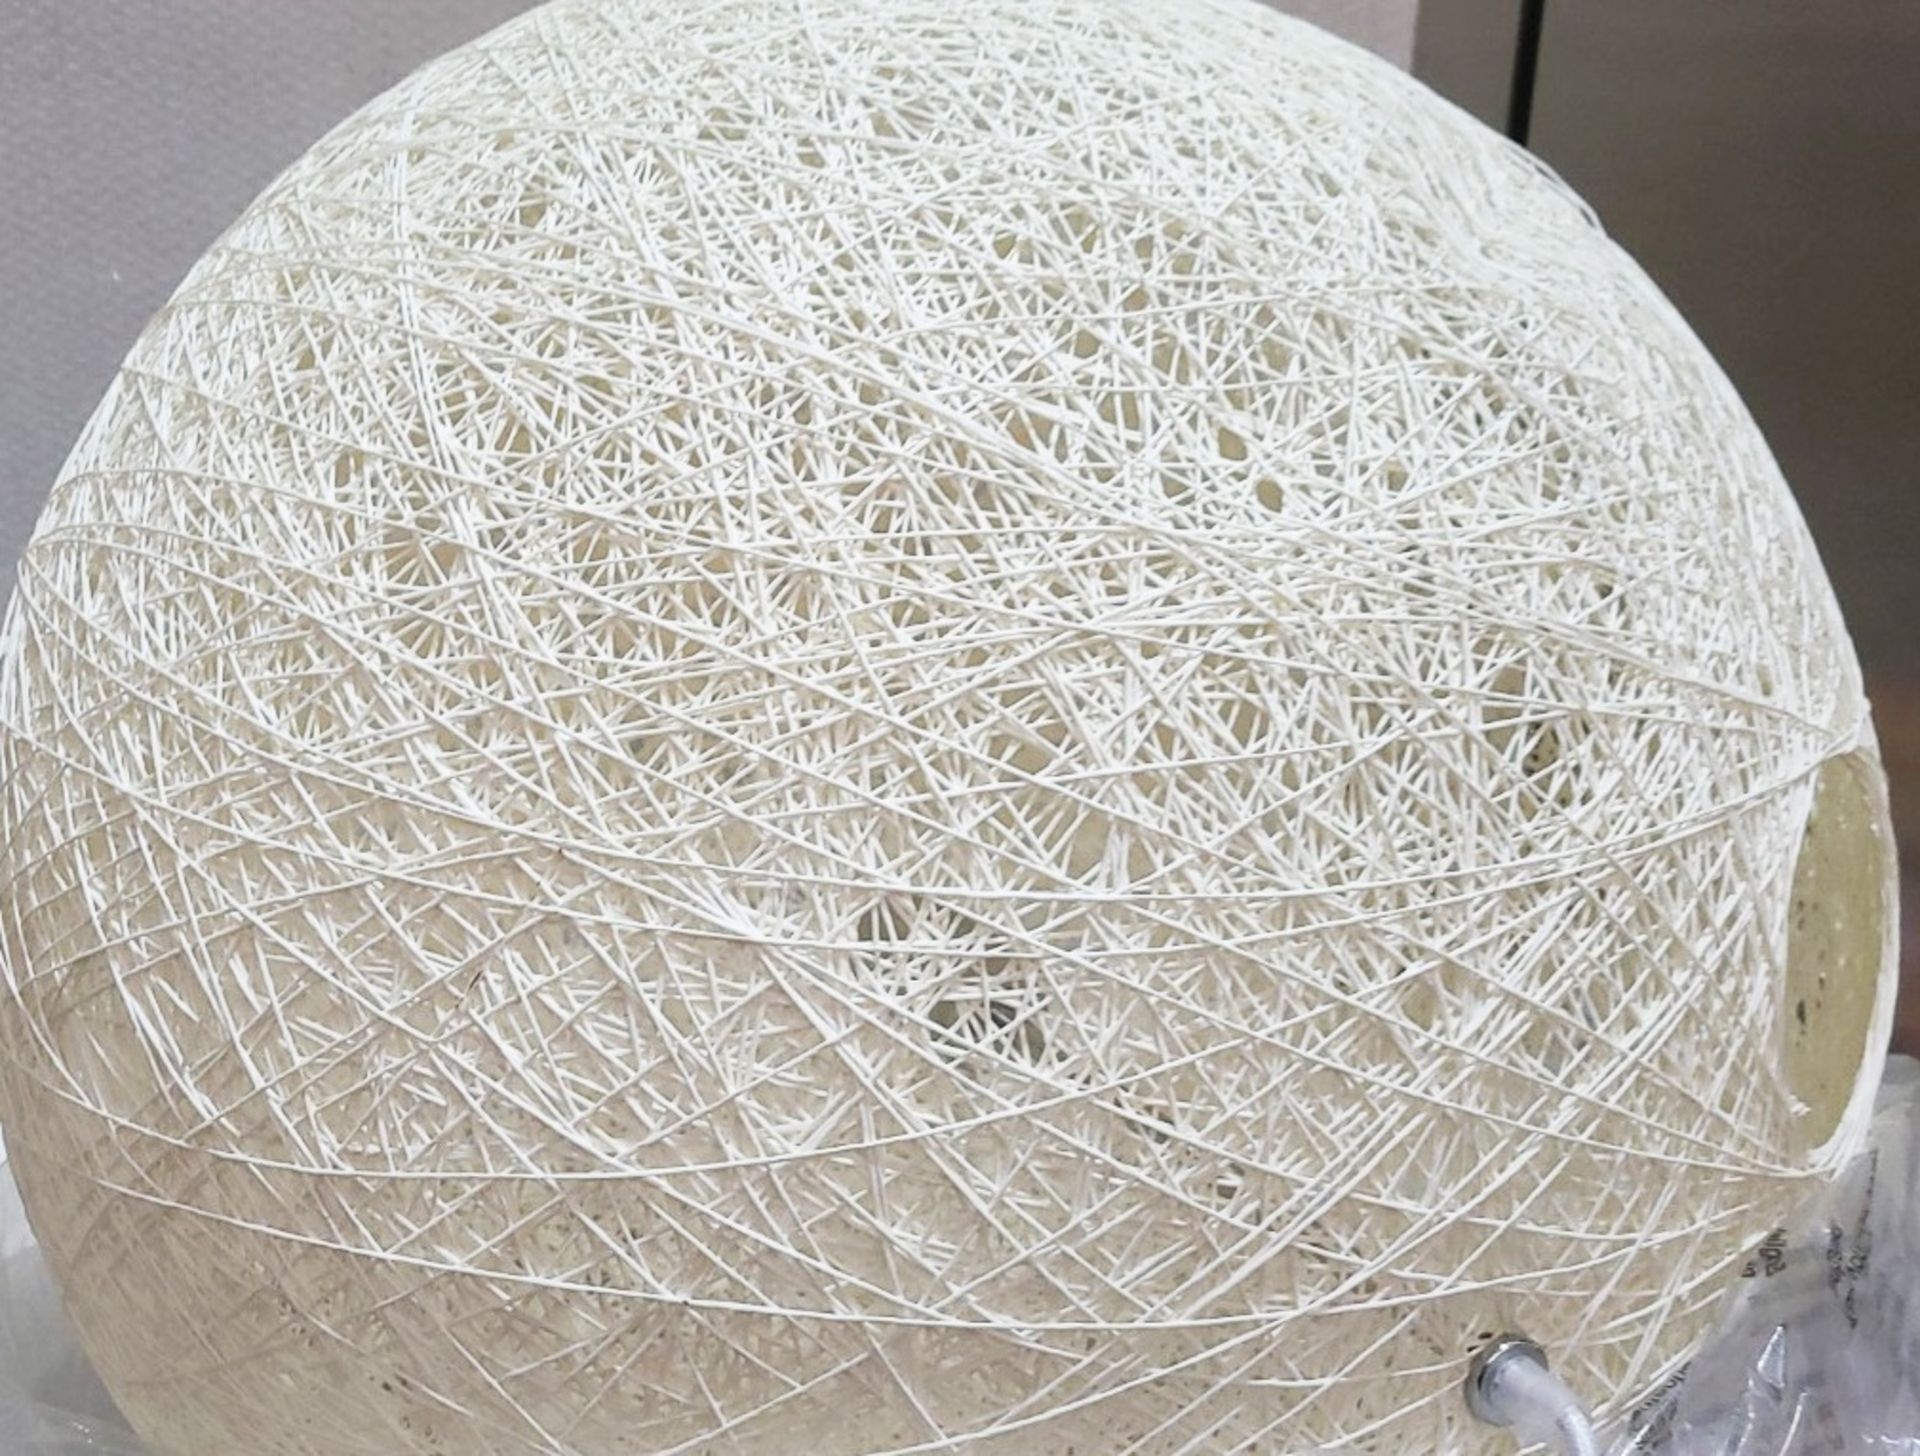 1 x BLUESUNTREE Elegant 58cm Off White Woven String Resin Nest Ball Pendant Lamp Wired For Mains - Image 5 of 6